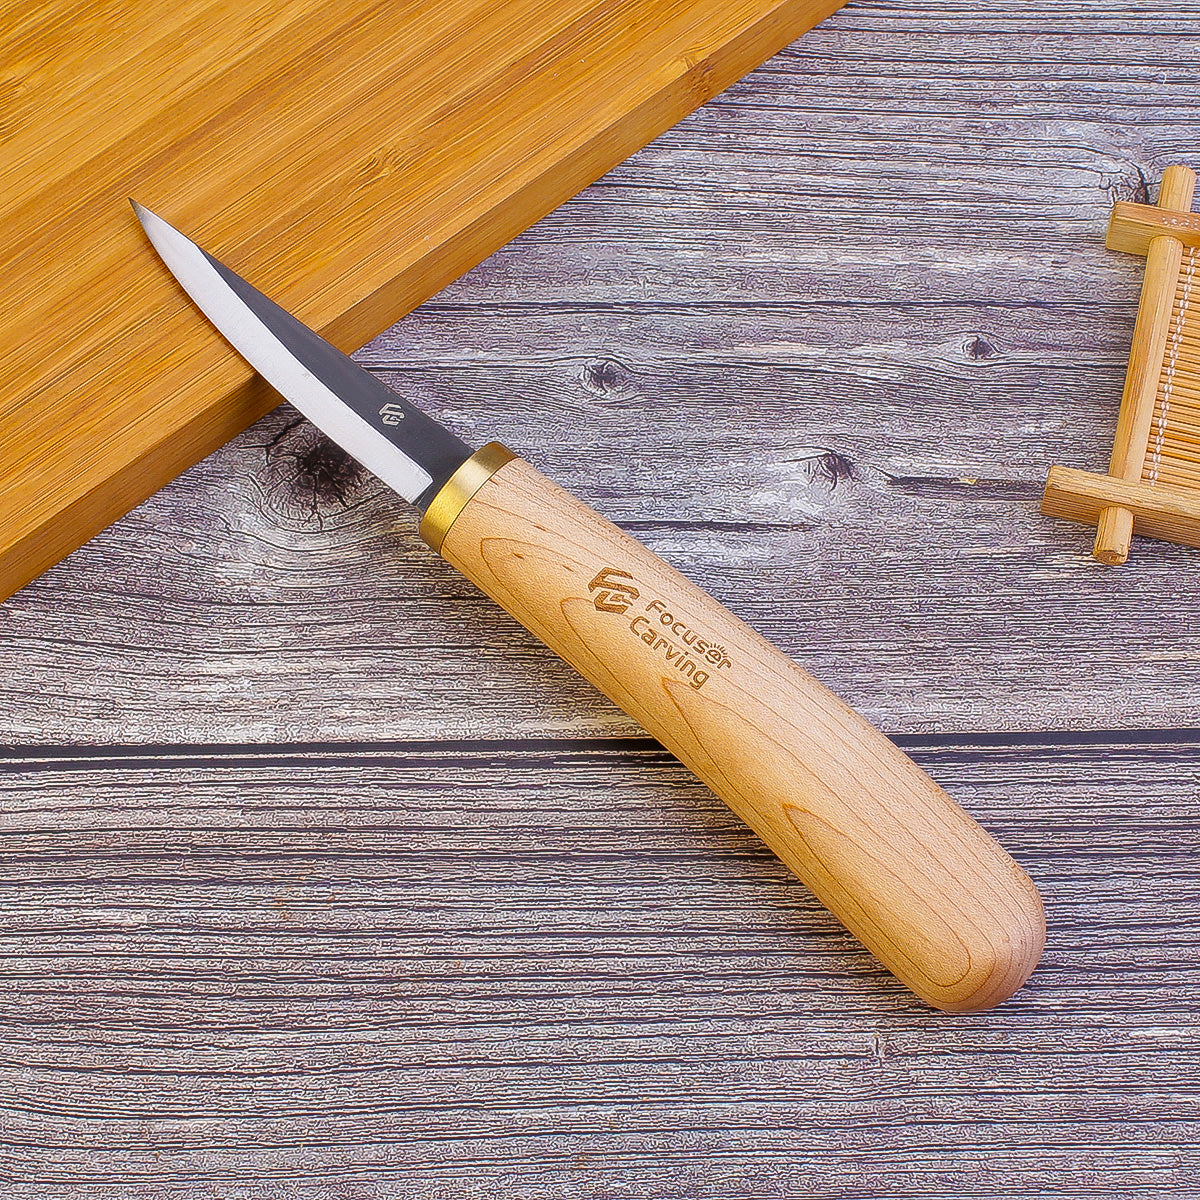 Sloyd Knife Good Quality Wood Carving Tools FC207